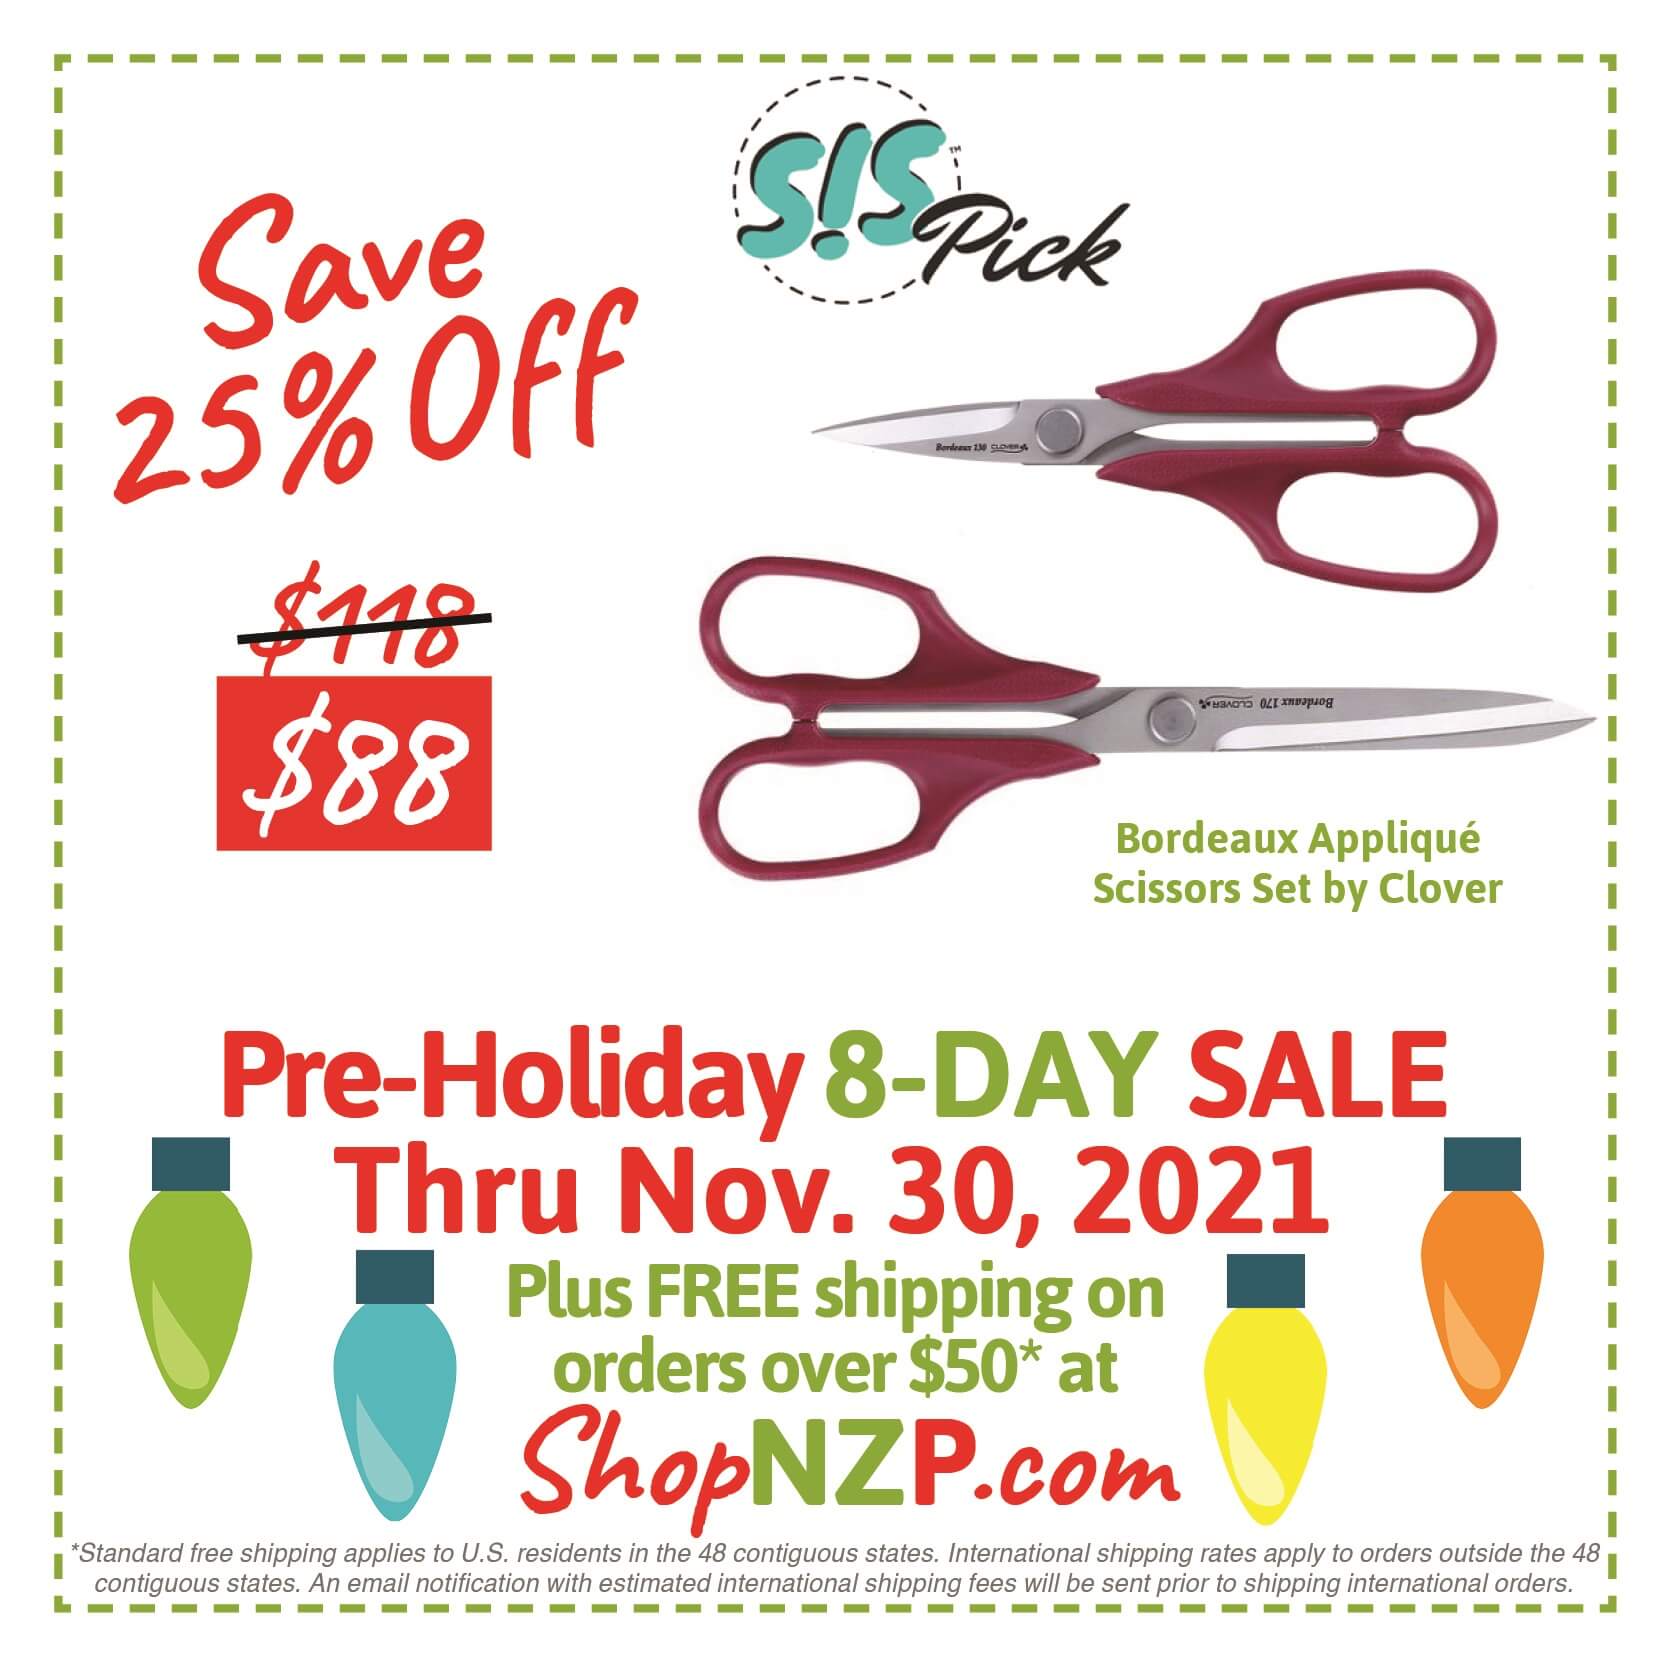 Save 25 Percent Off Bordeaux Applique Scissors at Nancy Zieman Productions at ShopNZP.com Sale Nov 23-30,21